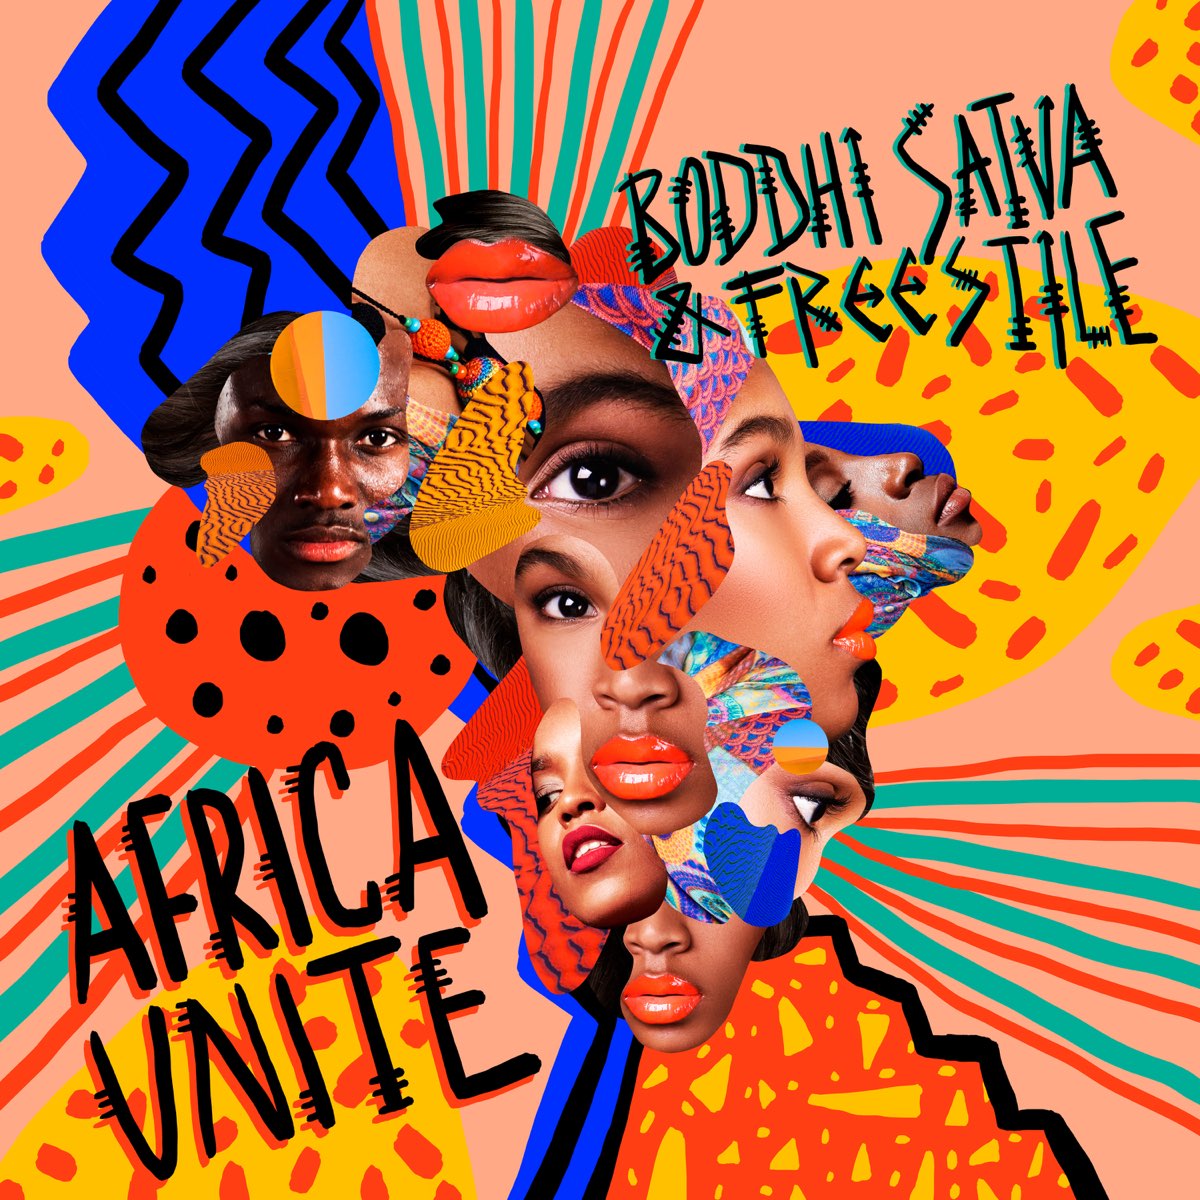 Africa unite. Afro плакат. Альбом Африка яркий Кадр. Карнавал Постер. Afrobeat.